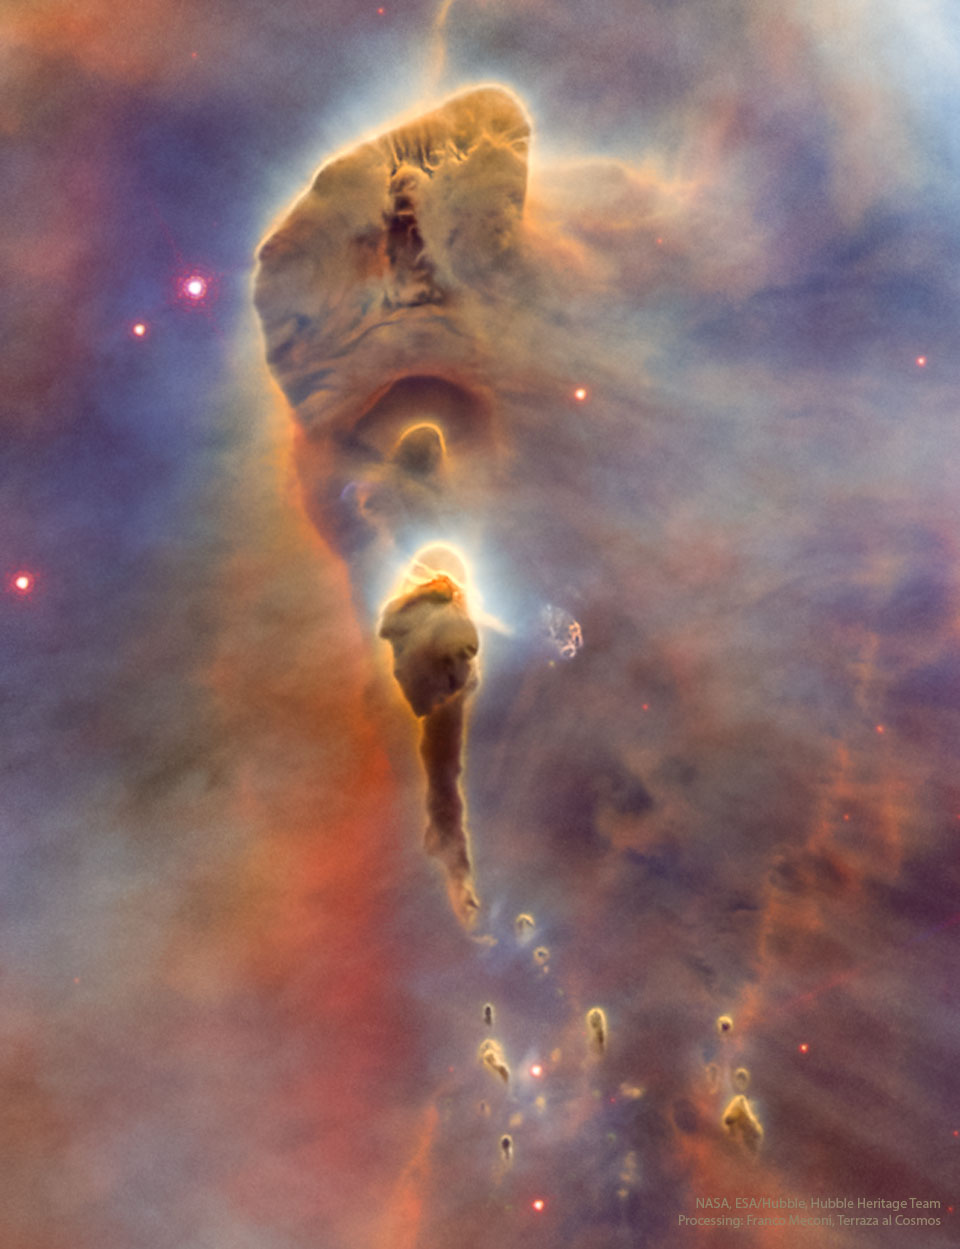 Stars Versus Dust in the Carina Nebula